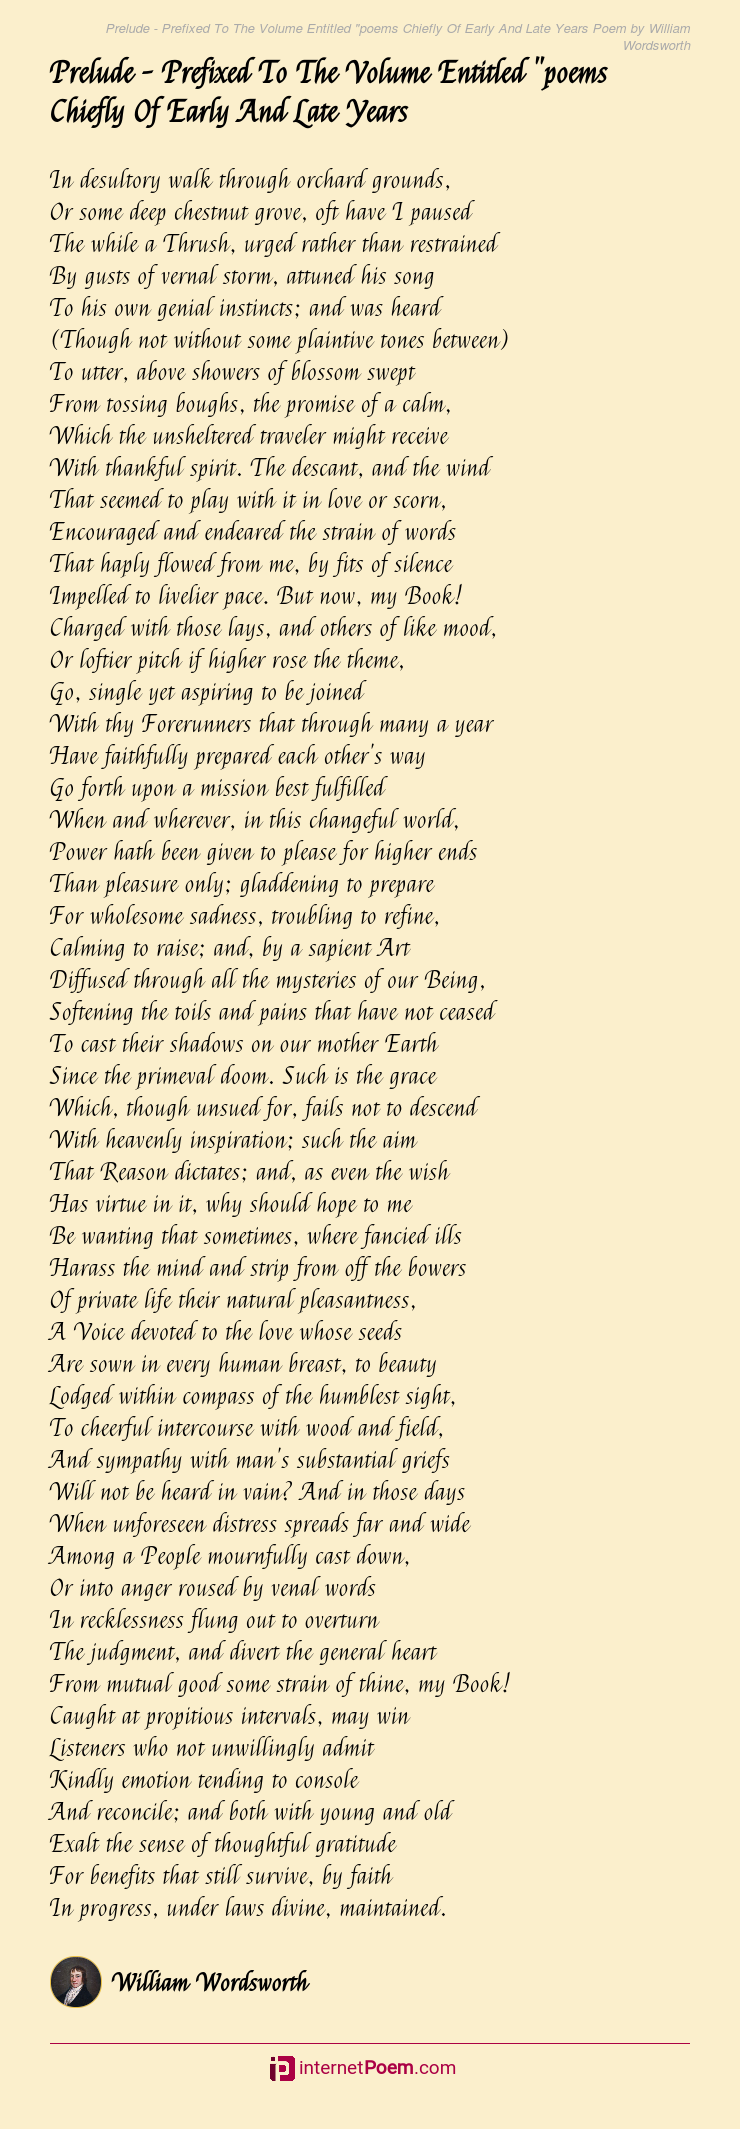 wordsworth poem the prelude